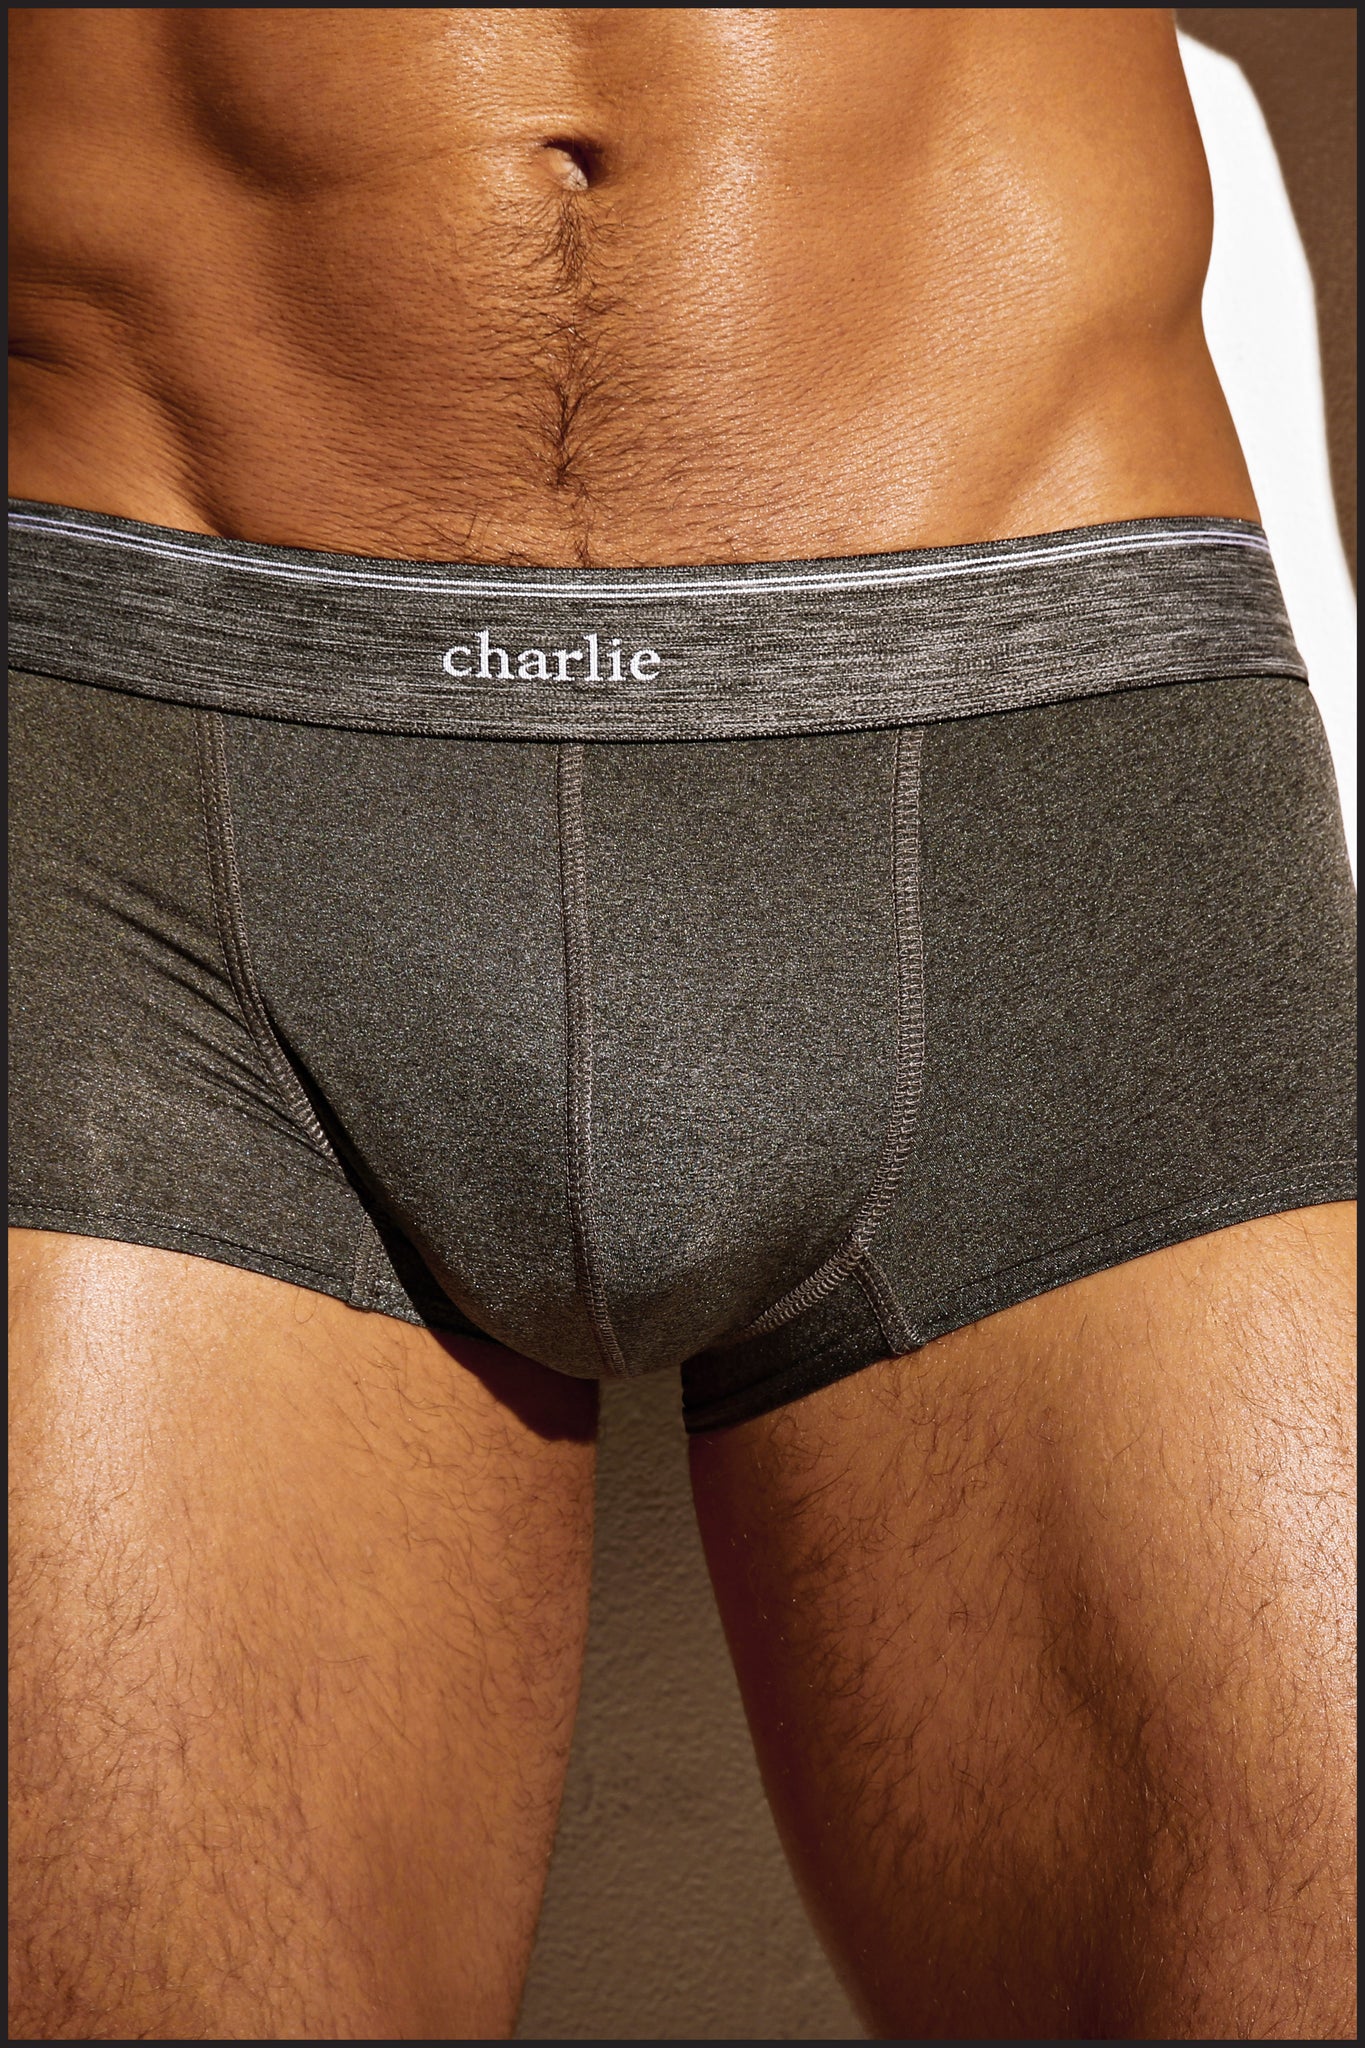 Charlie by Matthew Zink Fitness Underwear Classic Trunk